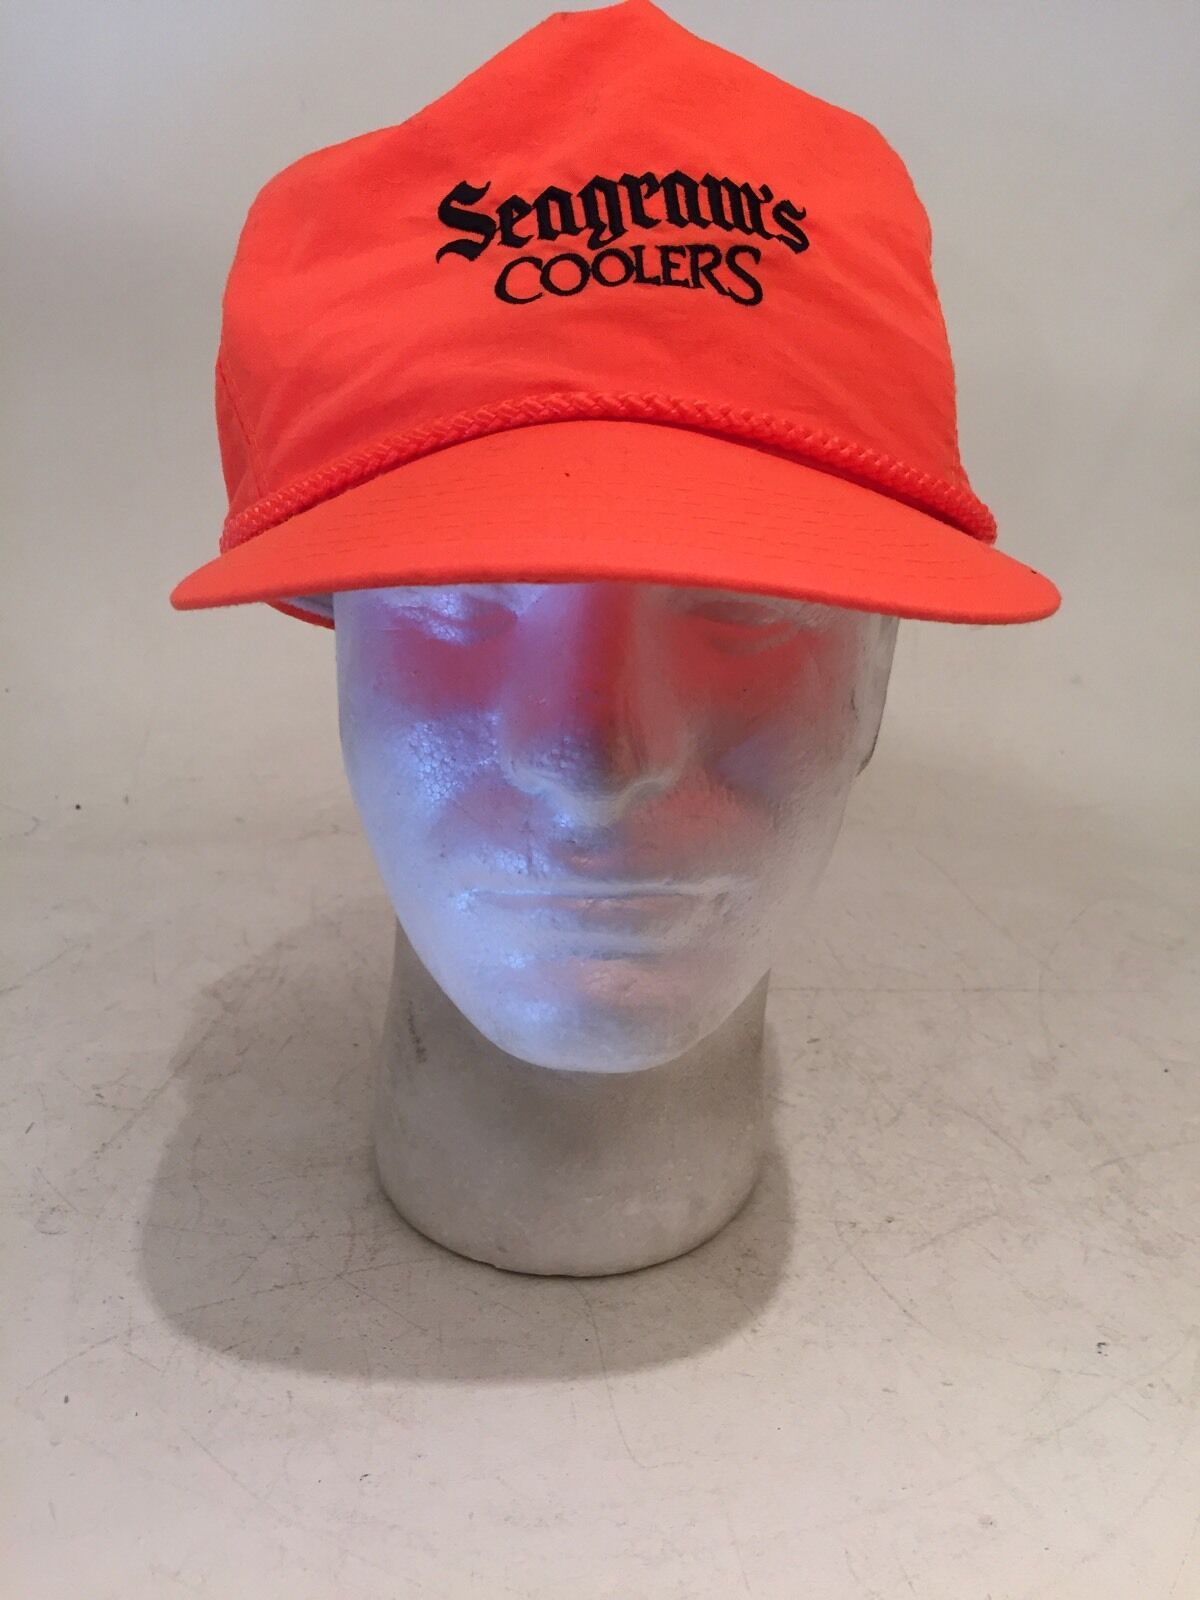 Vintage 1990s Seagrams Coolers Fluorescent Orange SnapBack Hat Cap